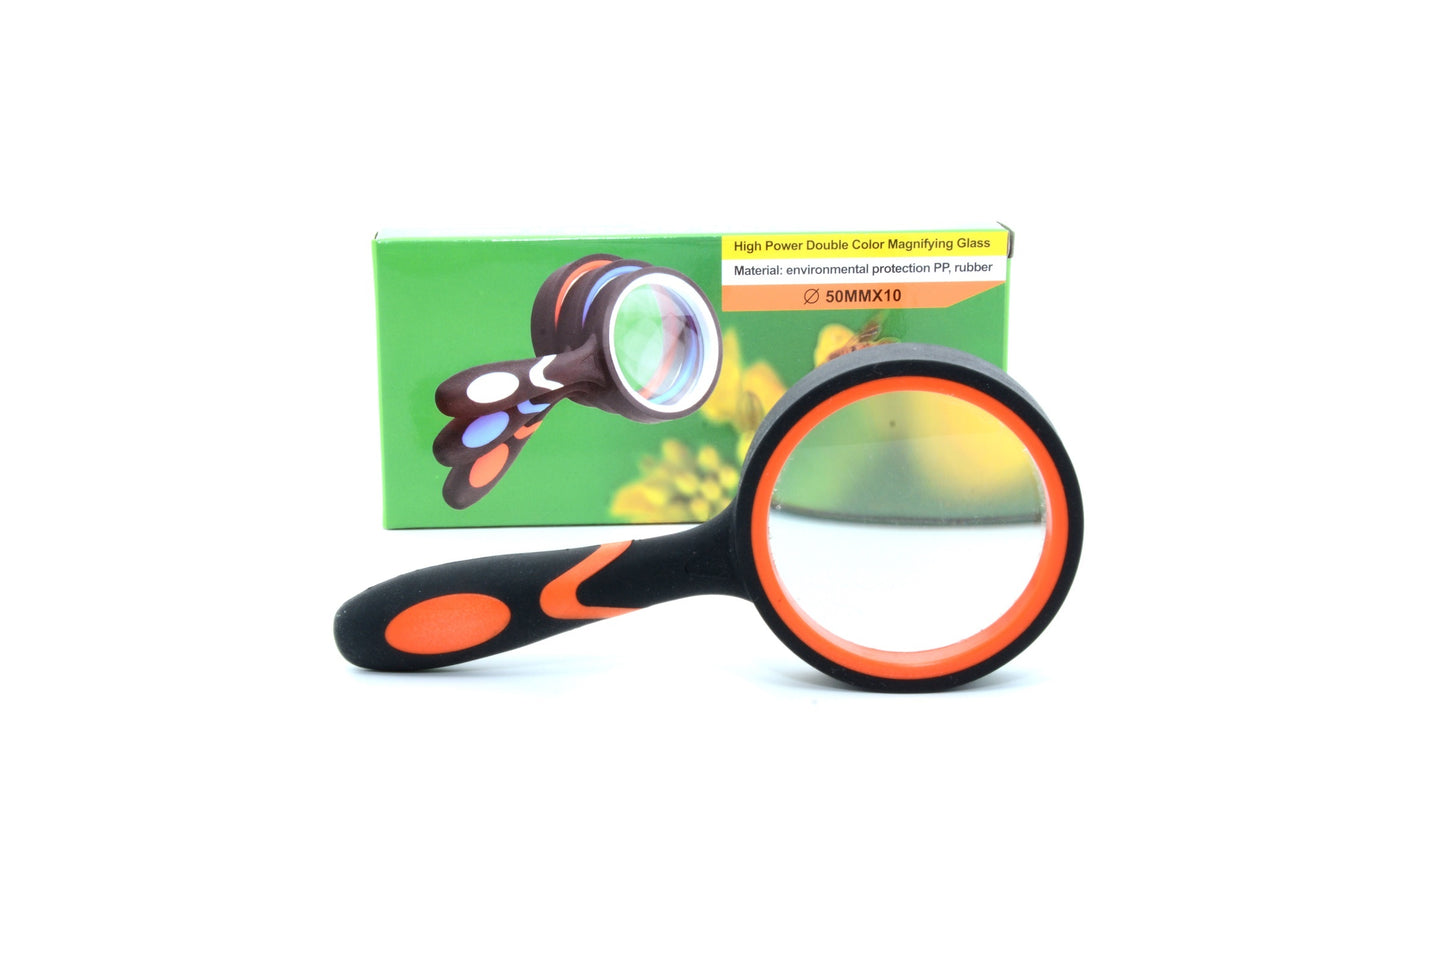 Magnifying glass 50mmx10 - Optics Trading